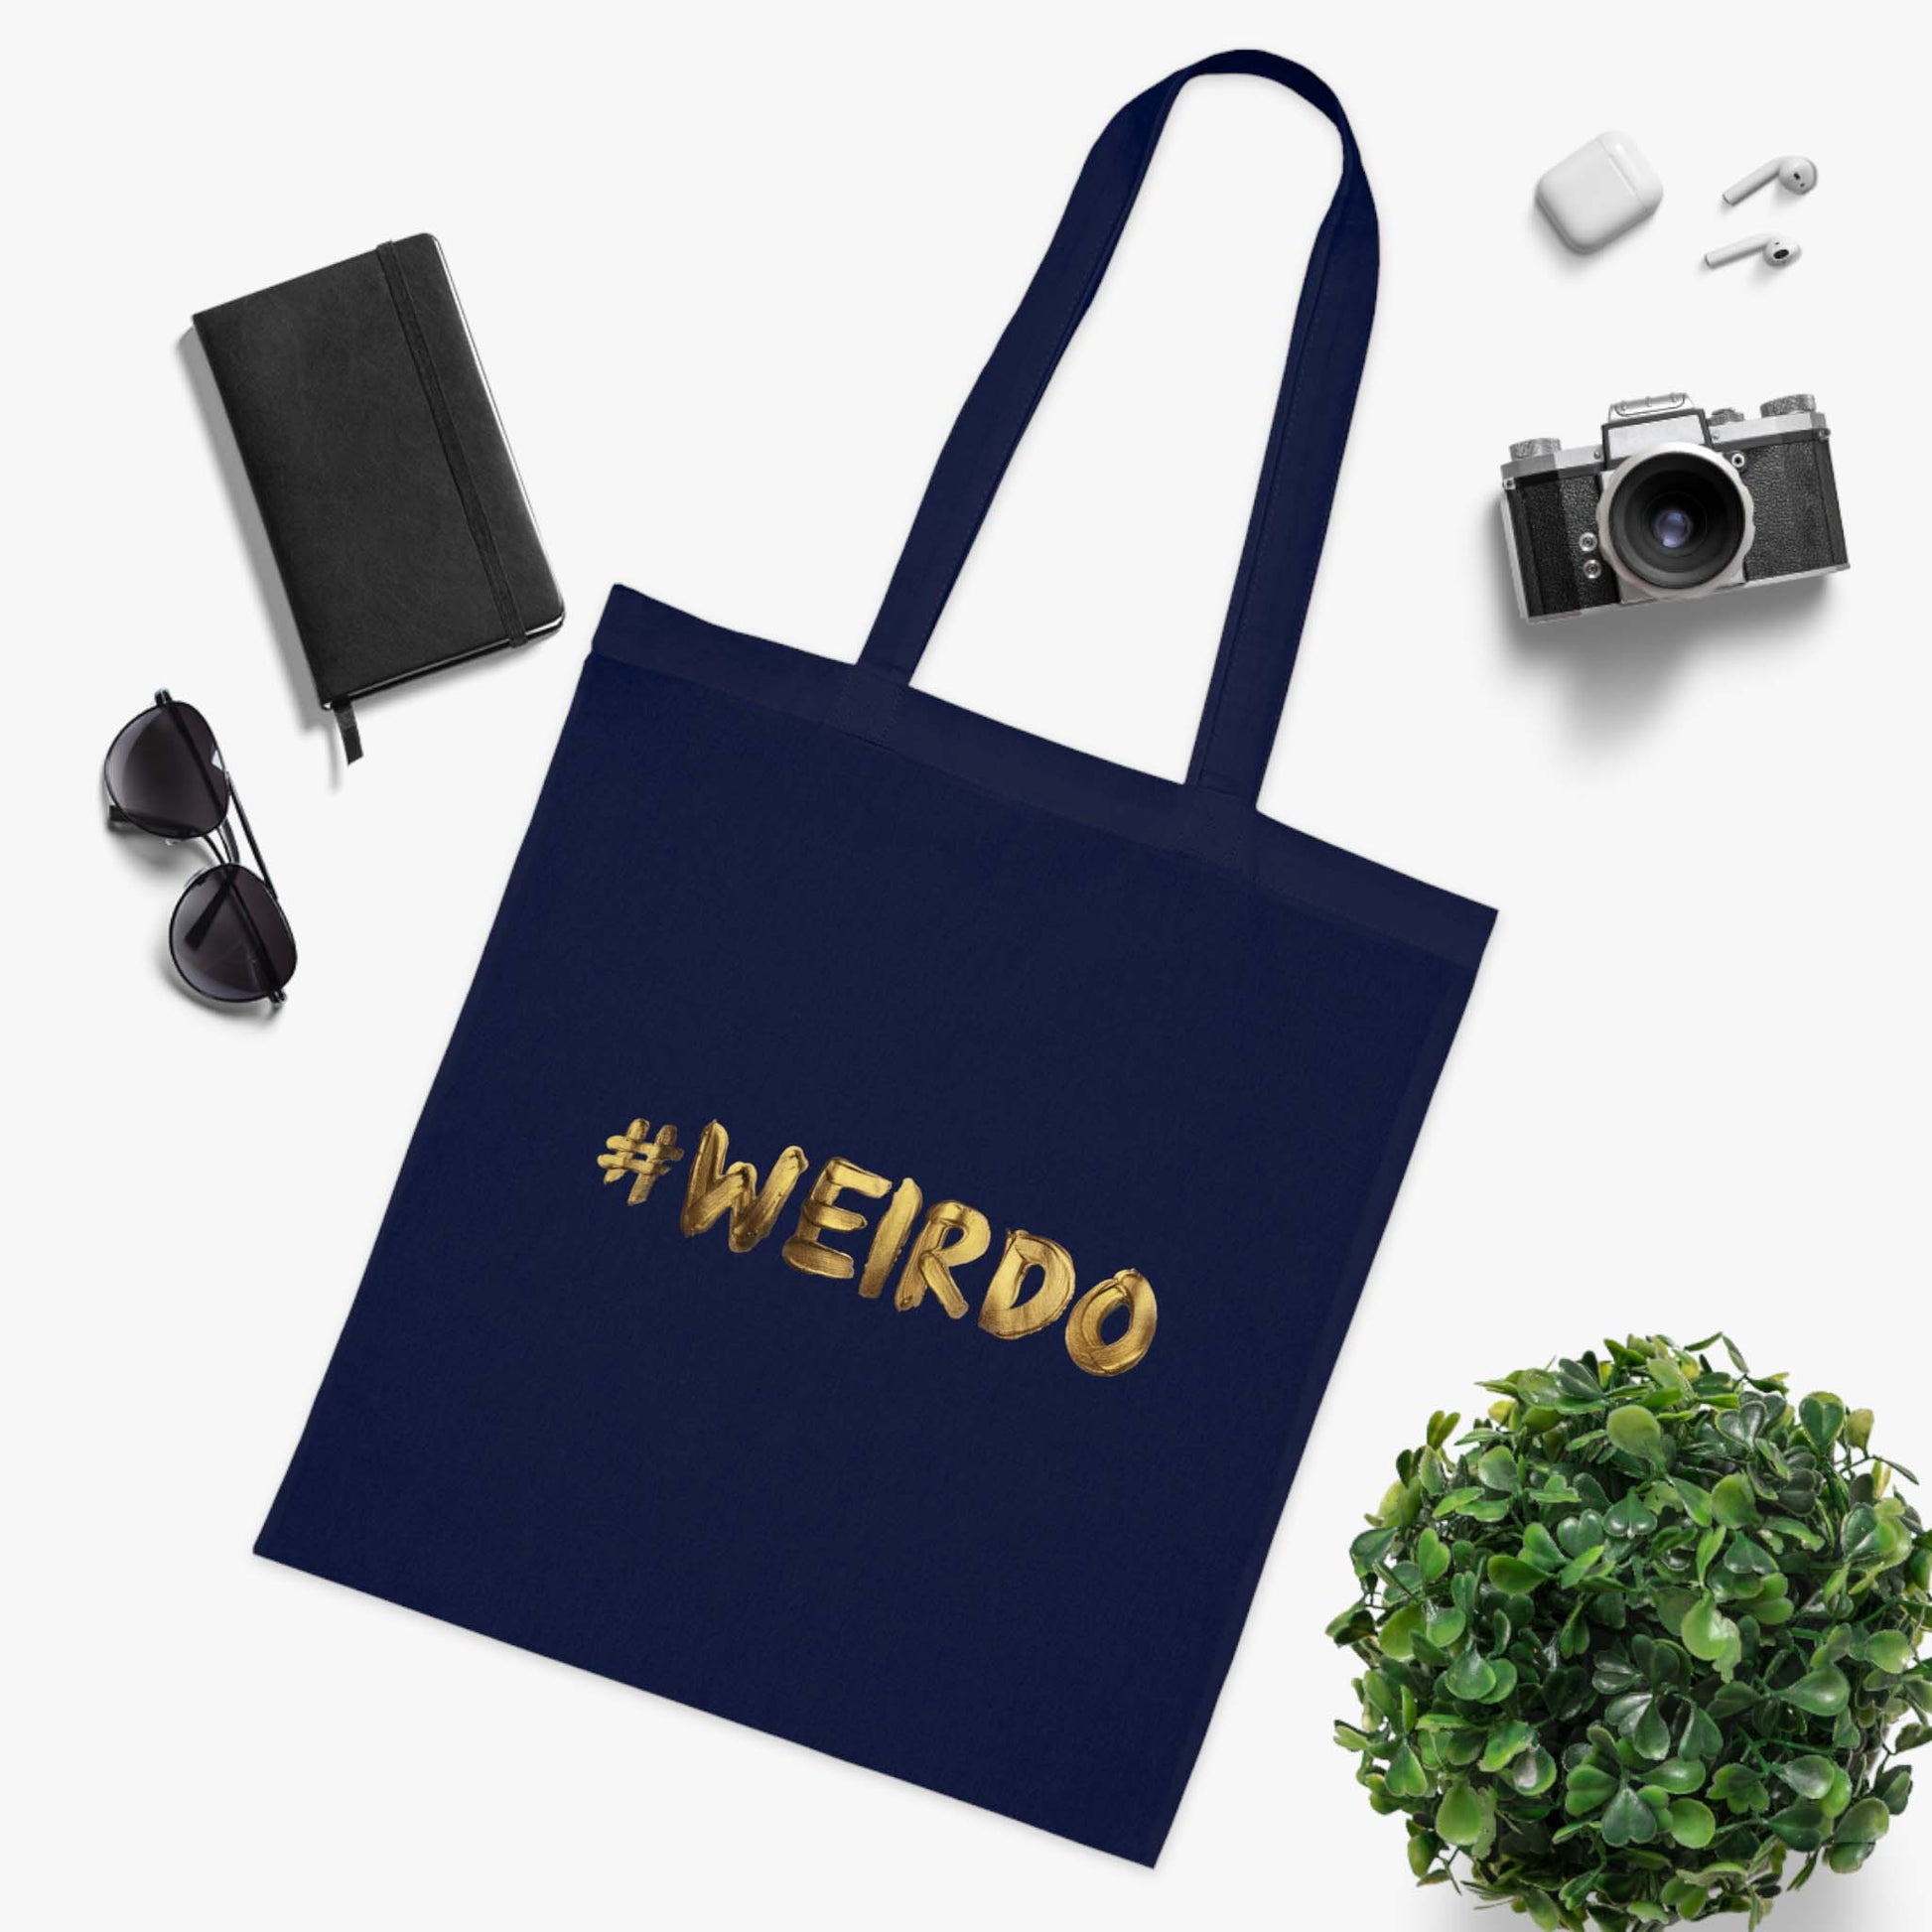 Shopping bag for weirdos! This navy blue shopping bag has our #WEIRDO meme shown at the front of the bag.